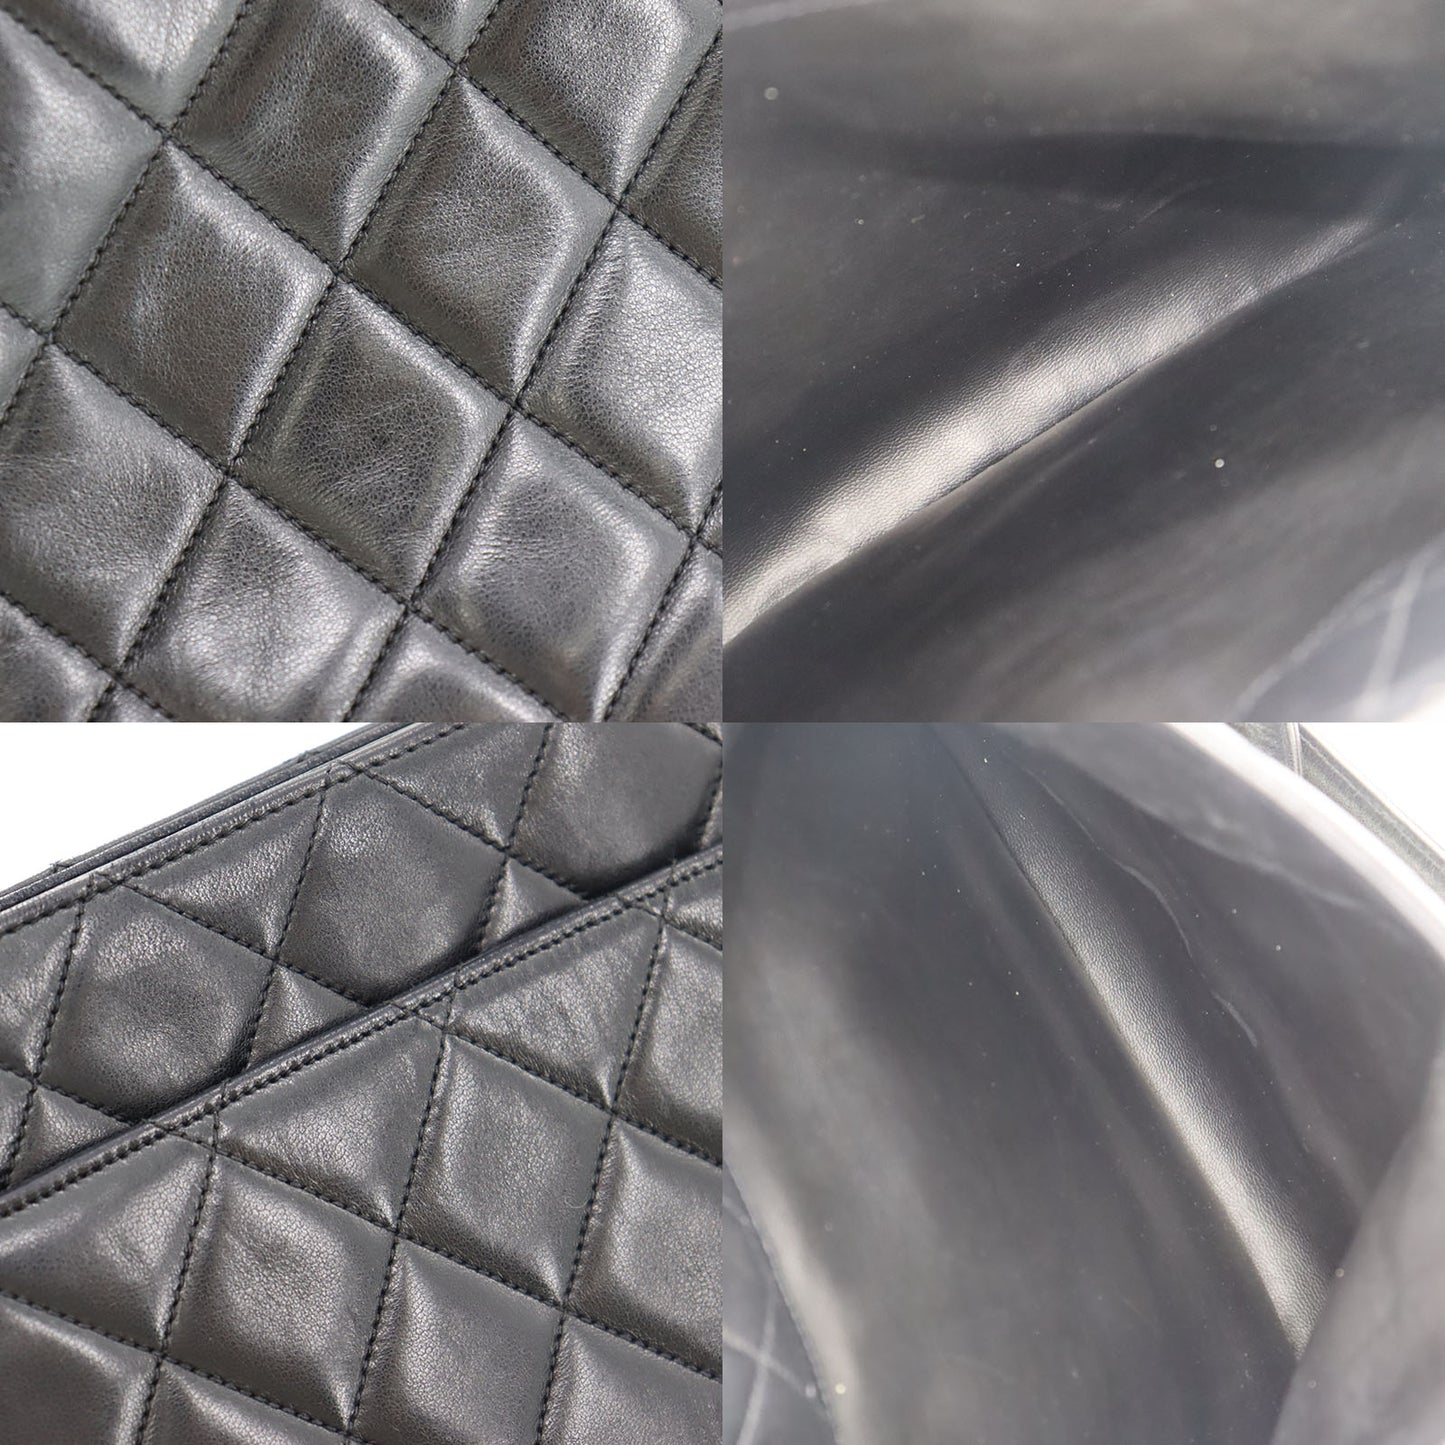 CHANEL Matelasse Chain HandBag Tote Black Lambskin Leather Italy #BJ454